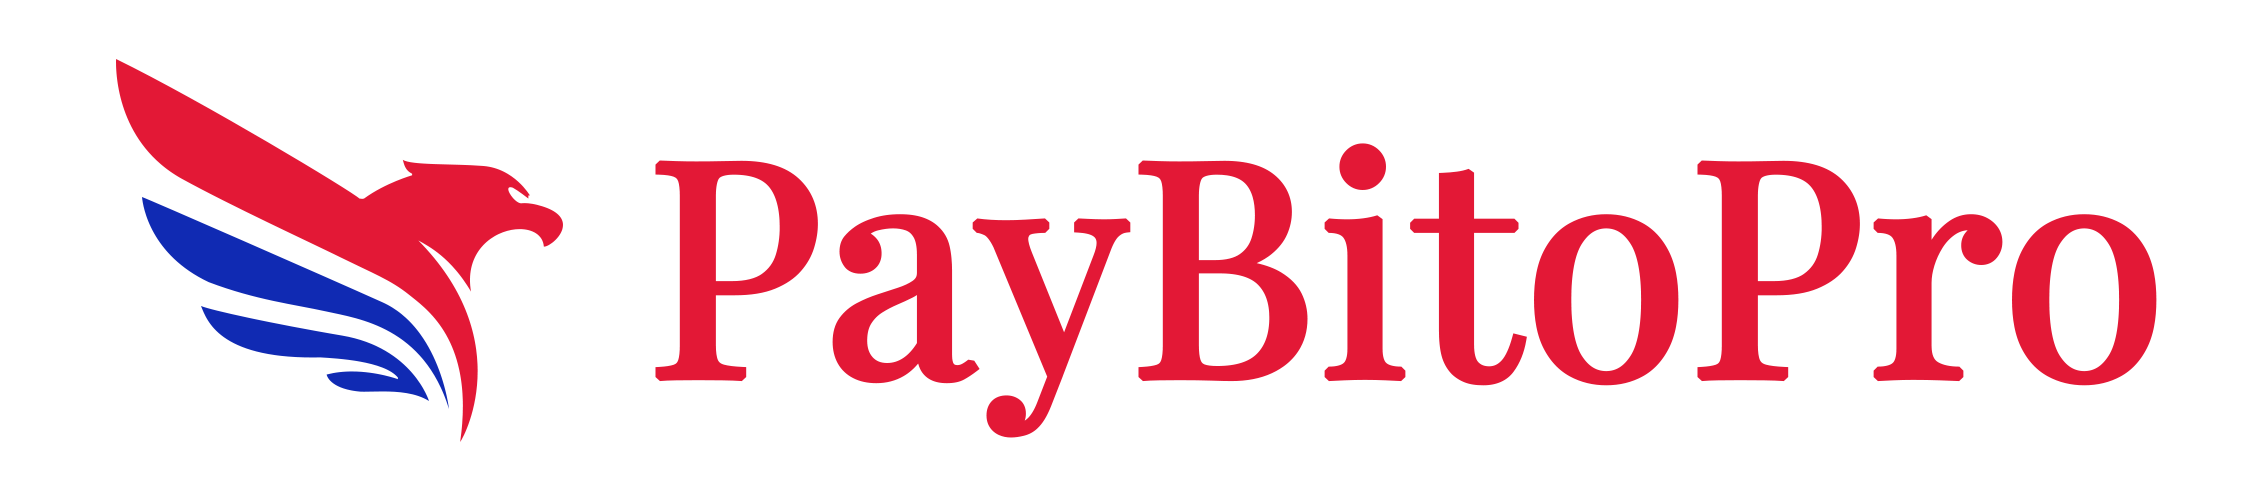 PayBitoPro Logo